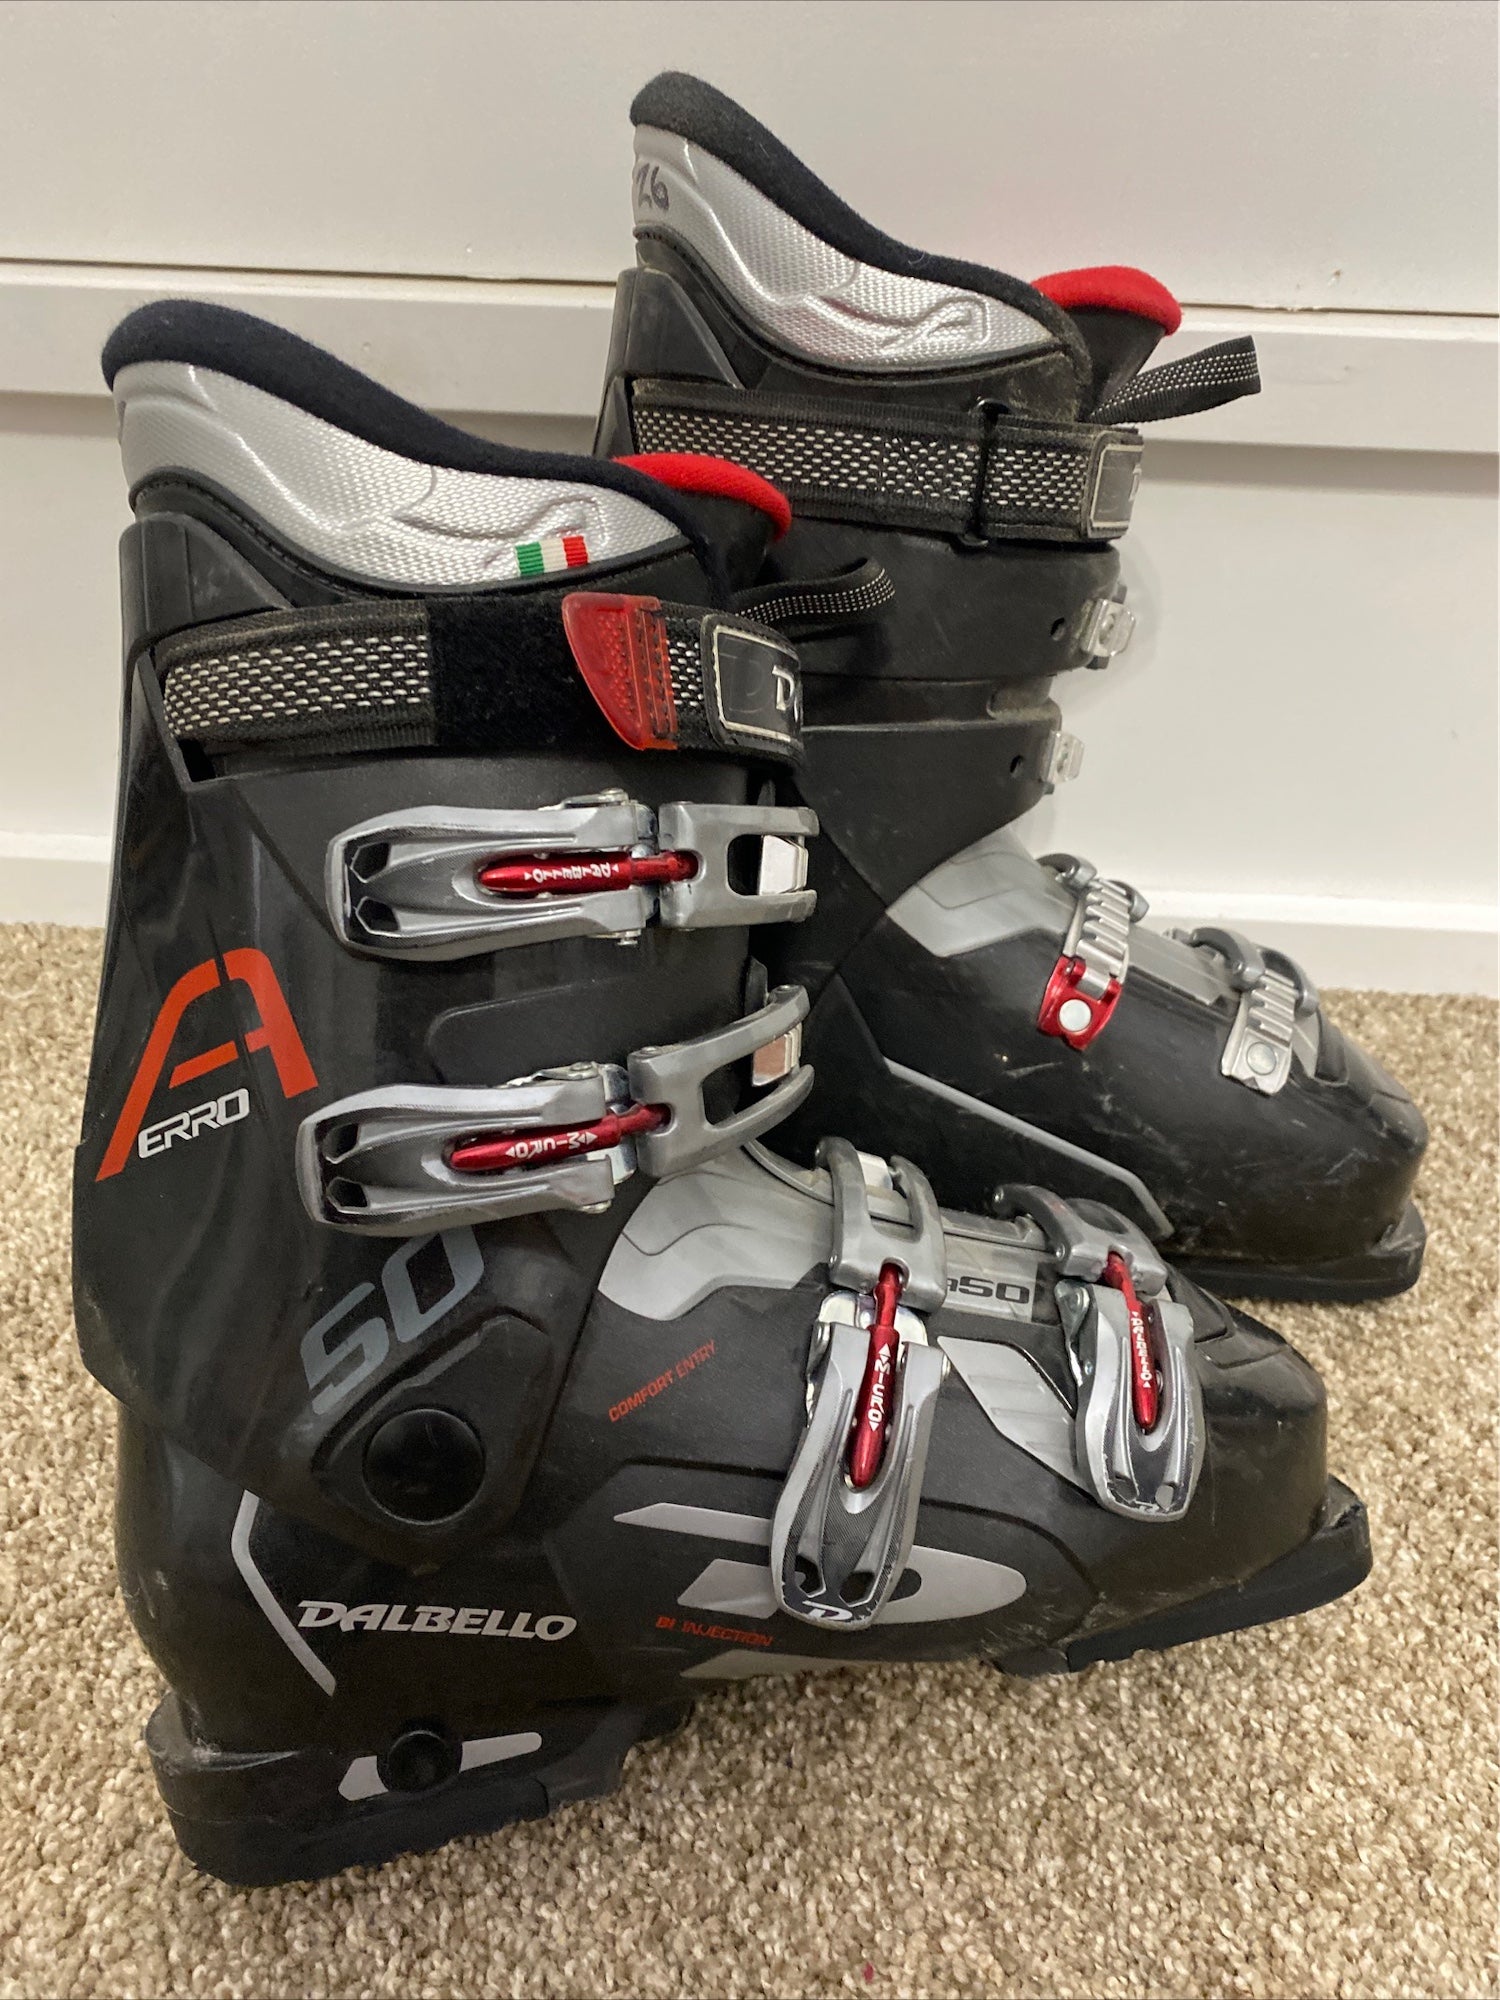 Dalbello Ultra 65 Women's Ski Boots 2023 - Only at L9 